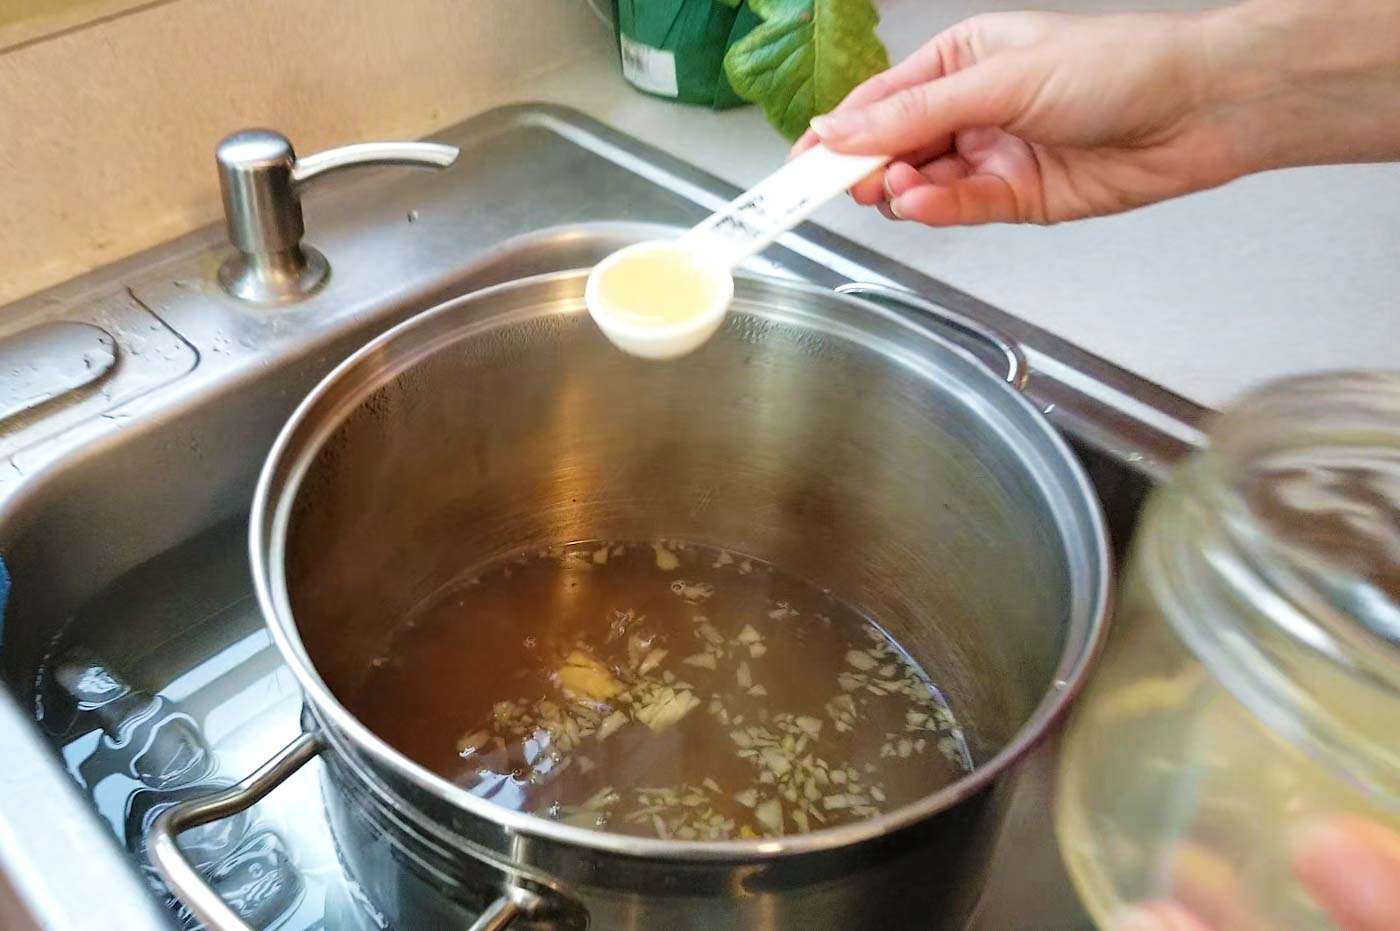 Making ginger ale wort lemon juice in sink